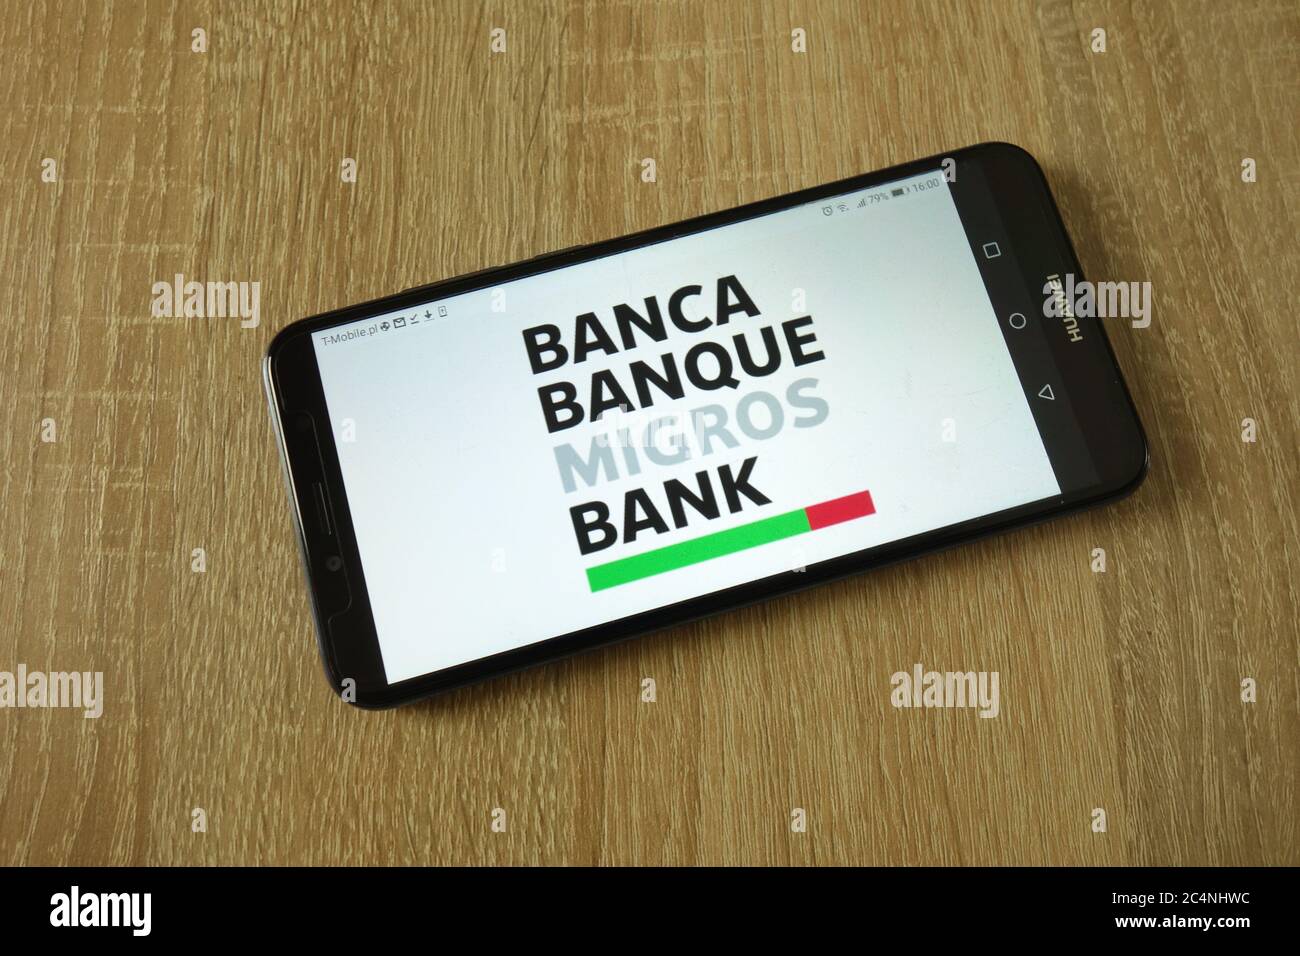 Migros Bank logo displayed on smartphone Stock Photo